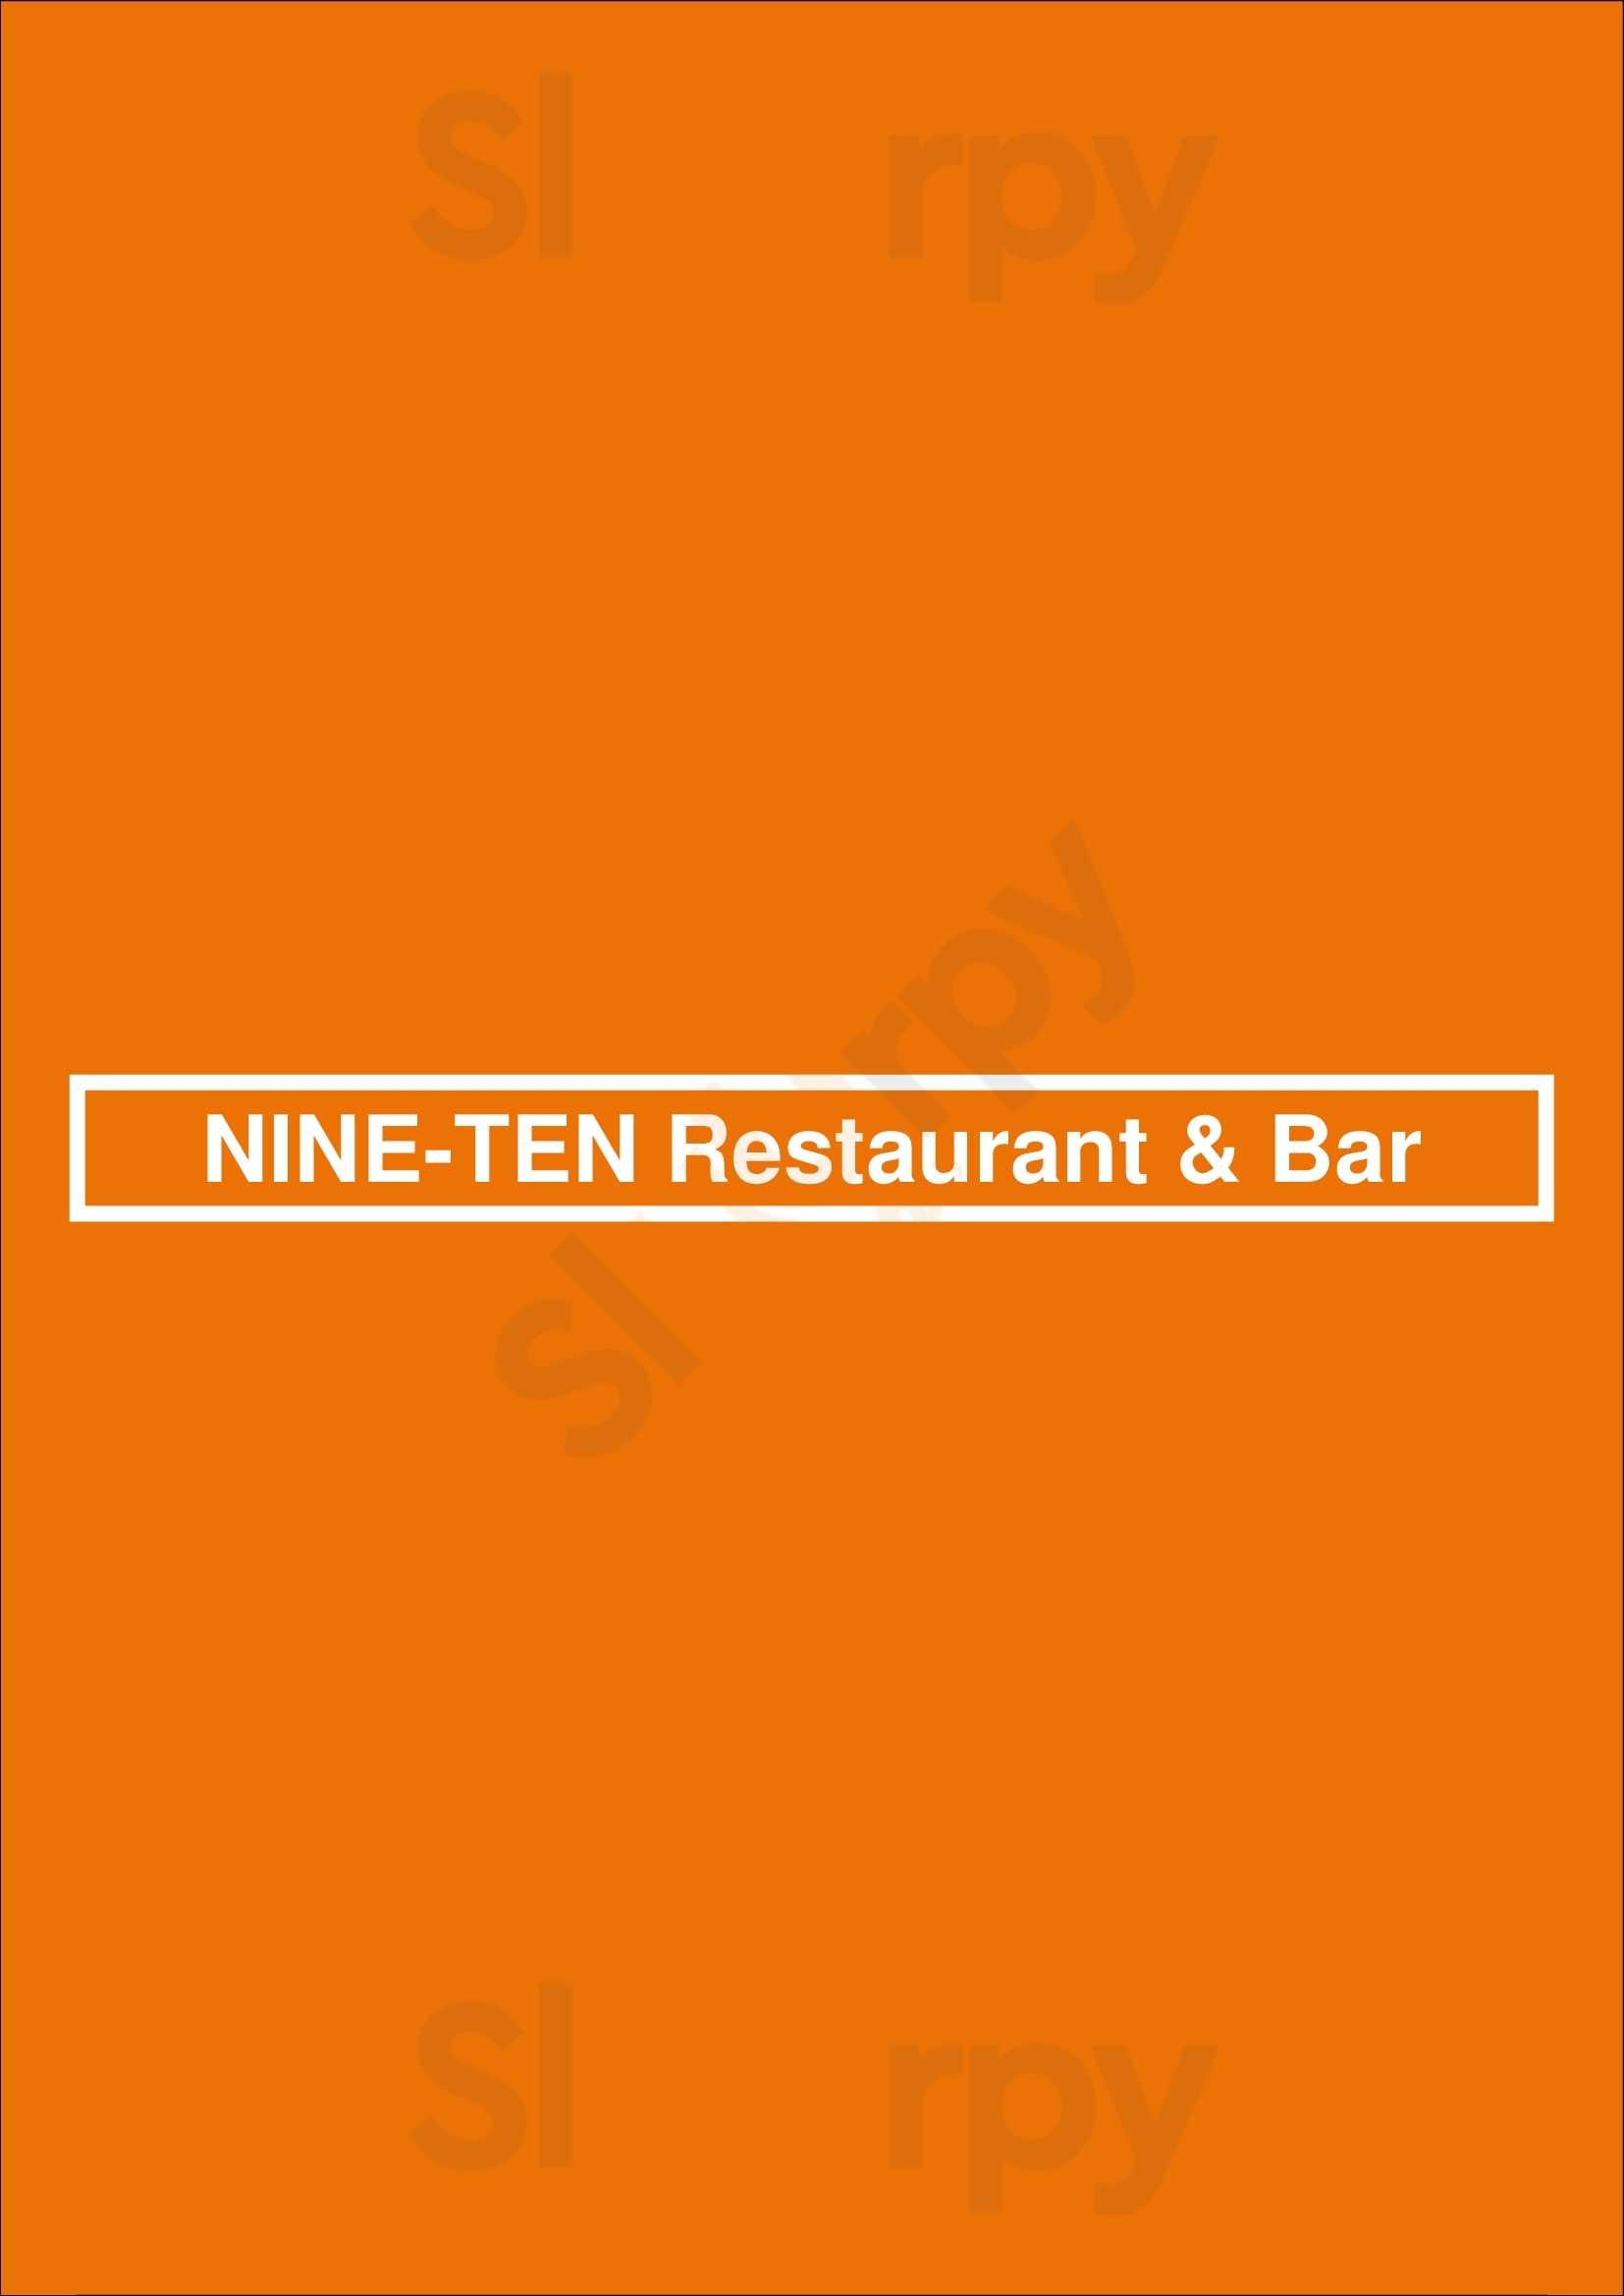 Nine-ten Restaurant & Bar La Jolla Menu - 1